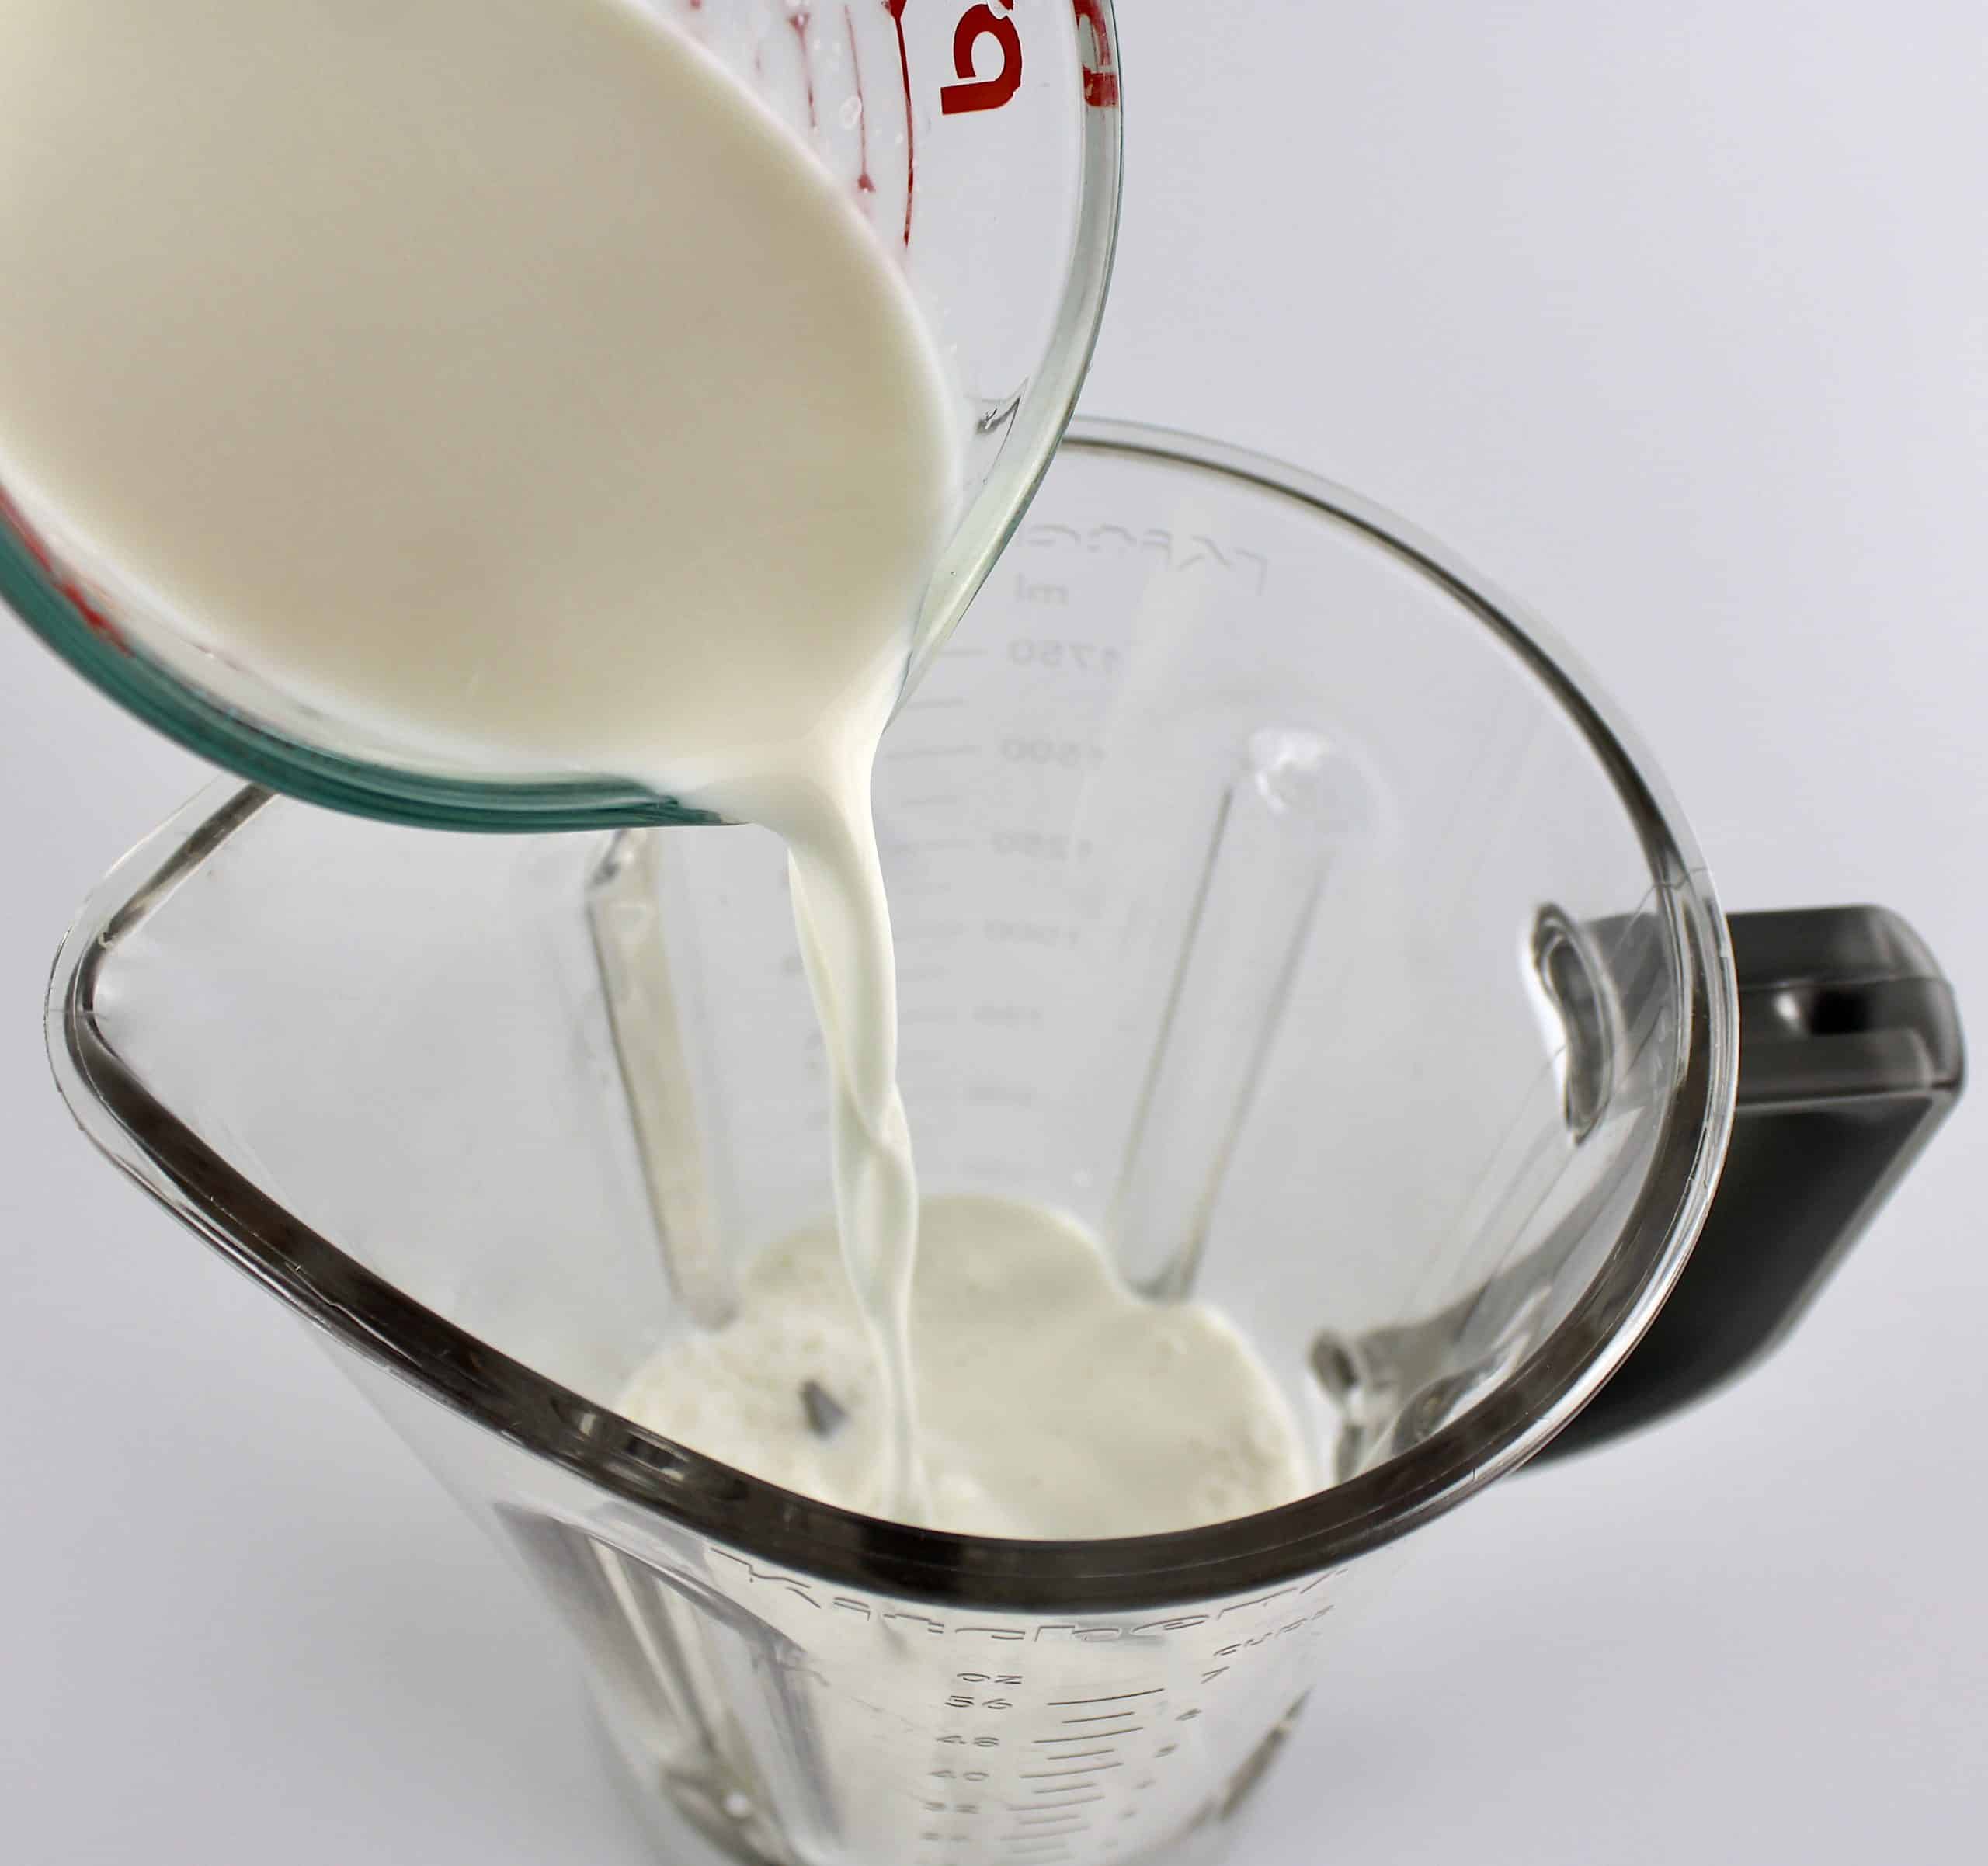 milk being poured into blender